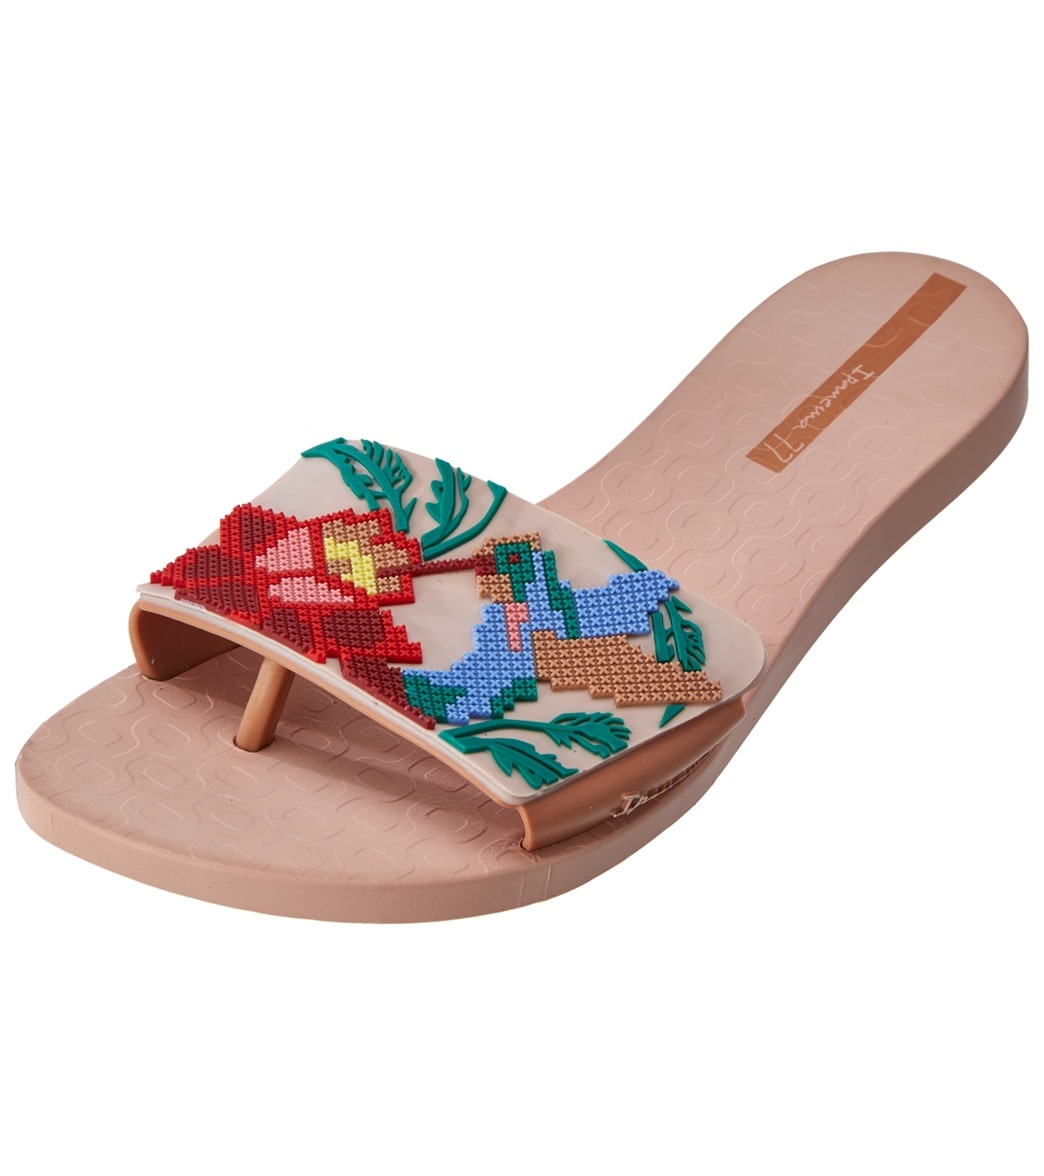 Ipanema Women's Nectar Sandals - Pink/Beige 5 - Swimoutlet.com